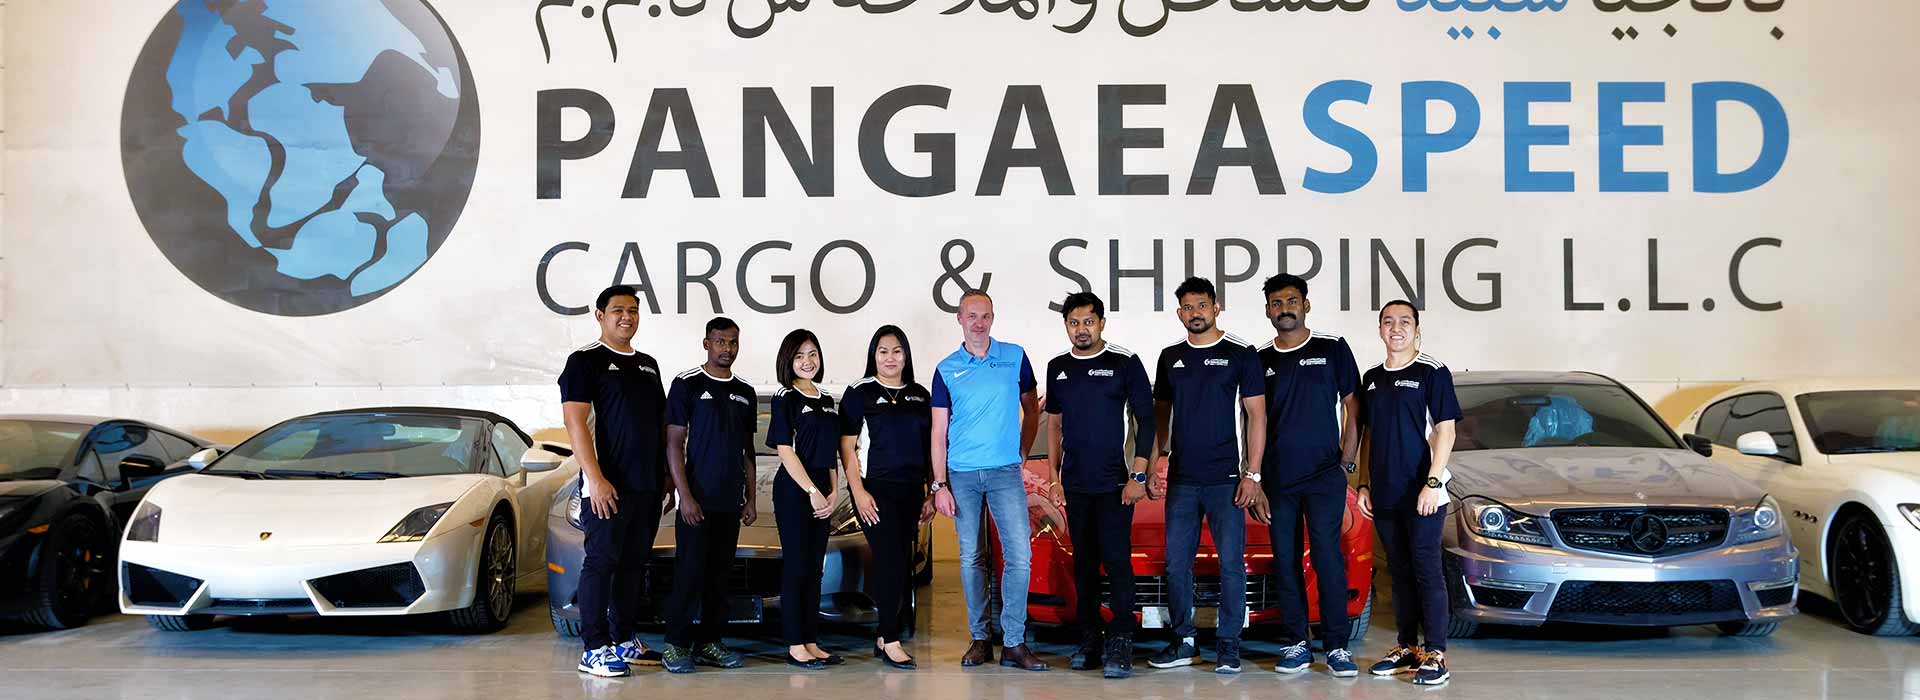 Carshipping-Dubai-PangaeaSpeed